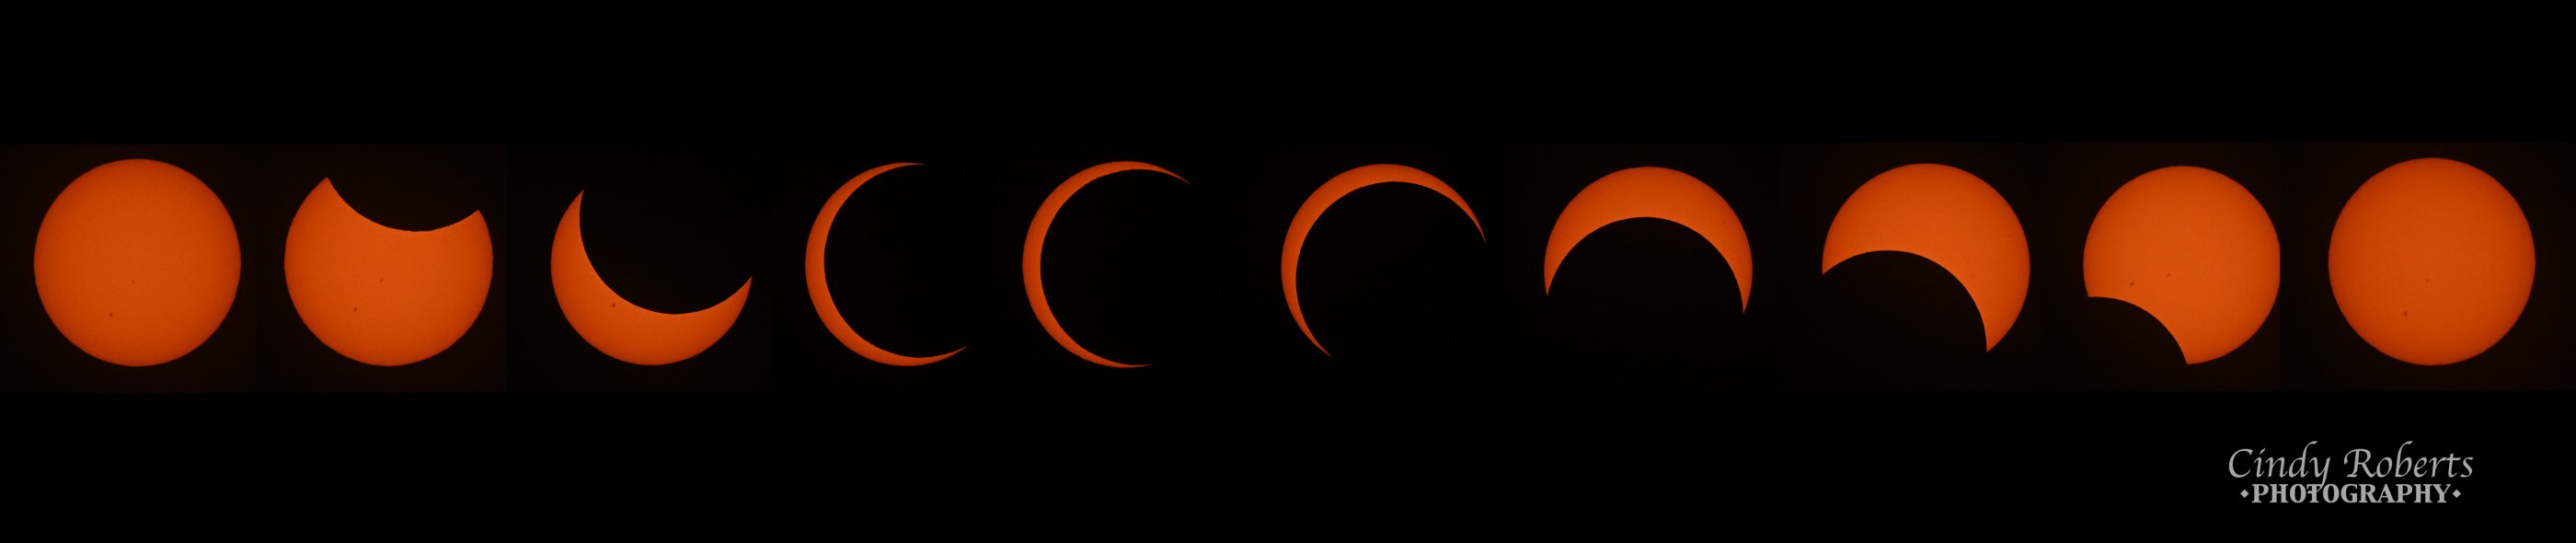 2023 Annular Eclipse Progression.jpg